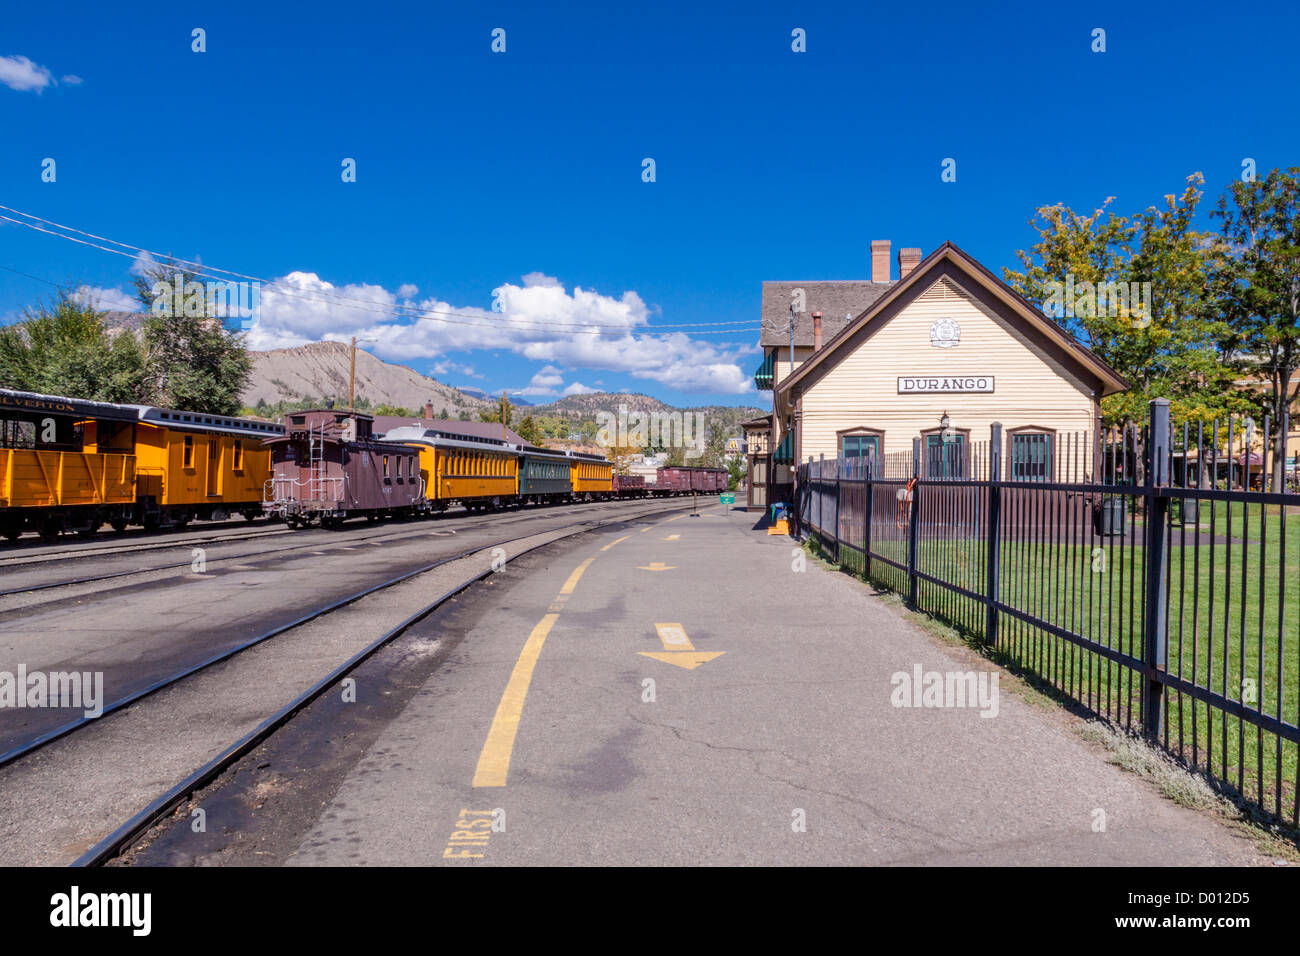 Durango Train Depot for the Durango and Silverton Narrow Gauge Railroad in Colorado. Stock Photo